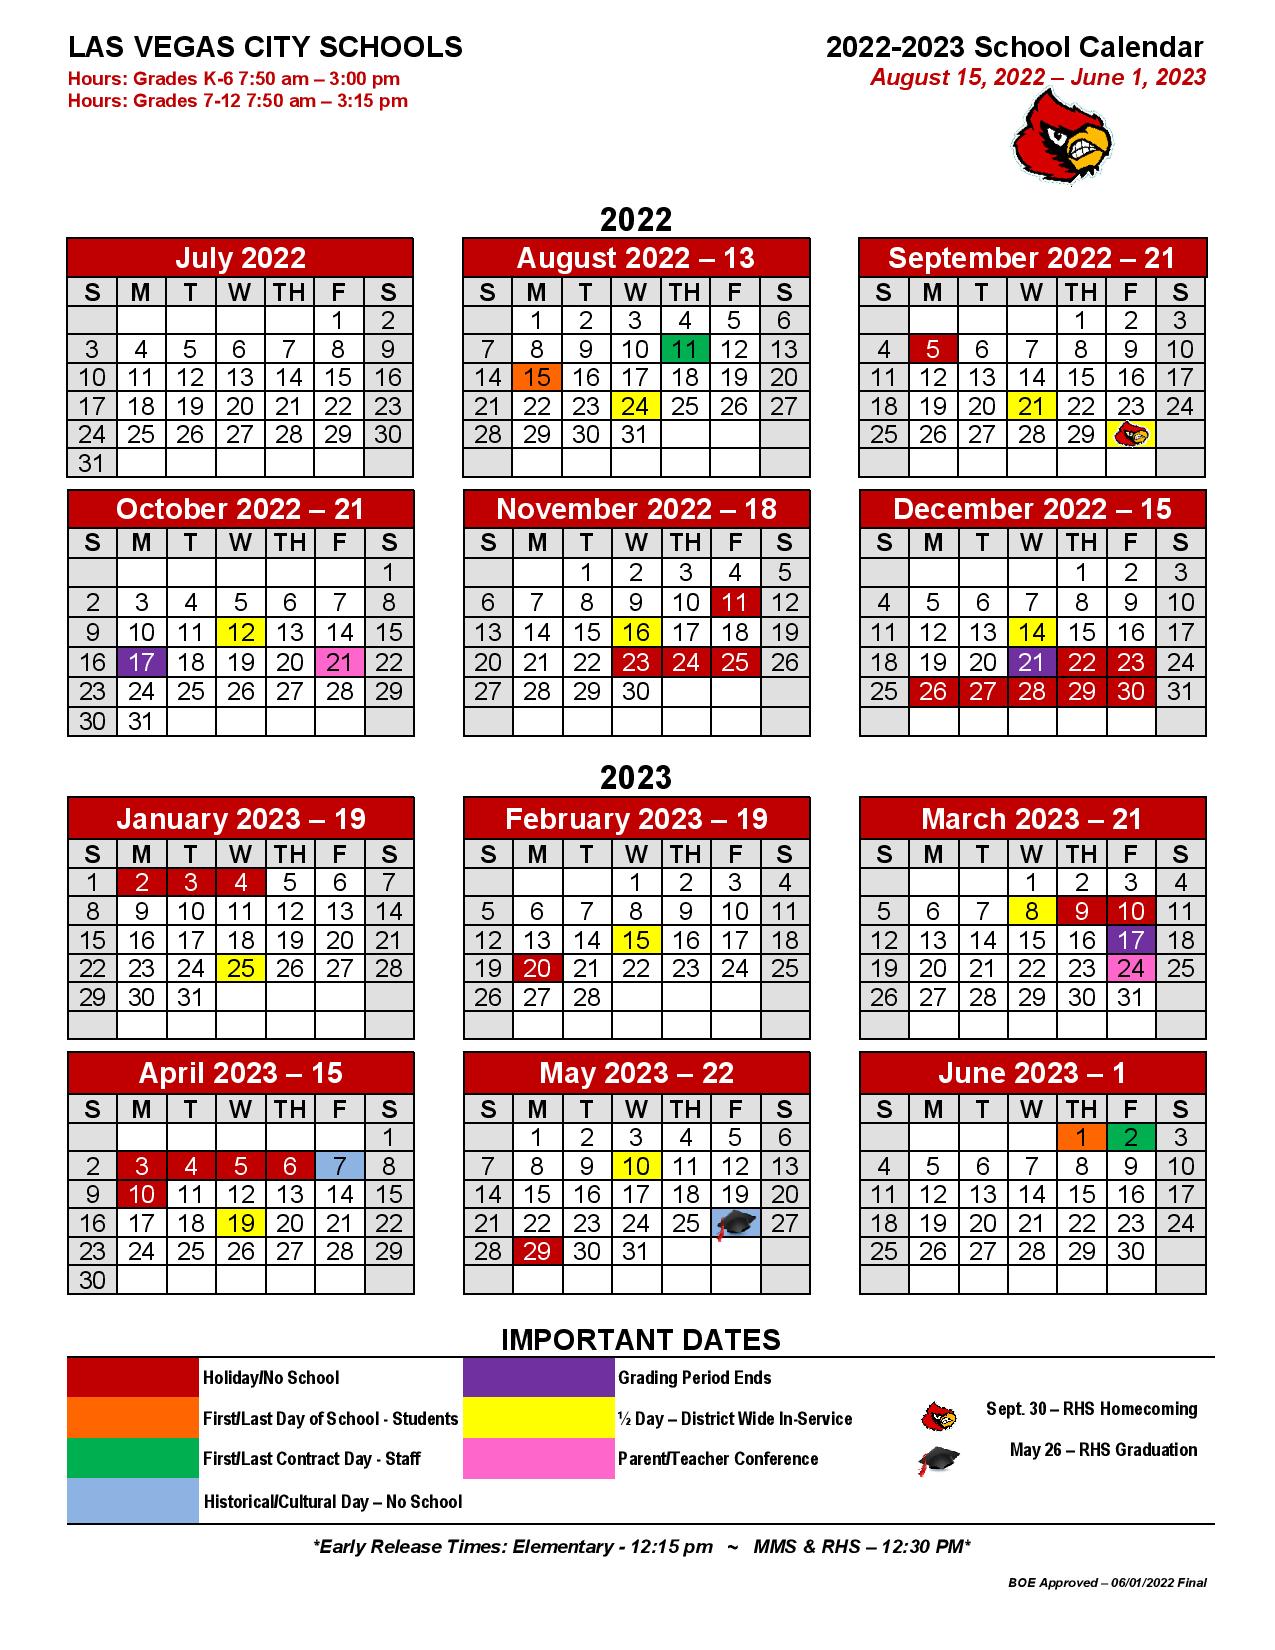 Las Vegas City Public Schools Calendar Holidays 2023 School Calendar Info